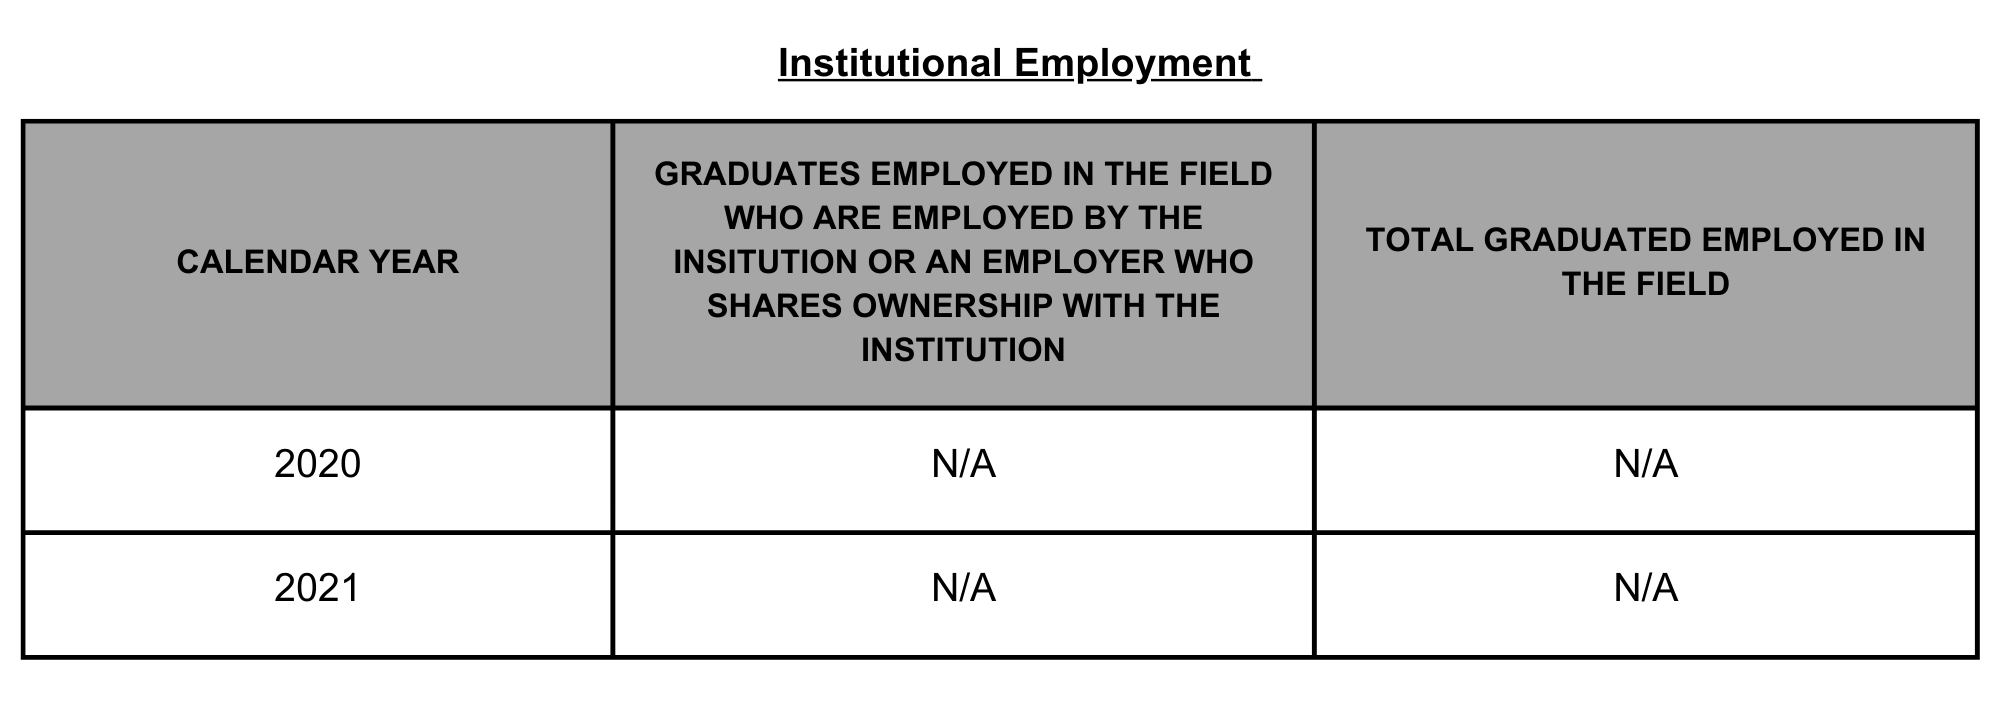 06 SPFS Institutional Employment MASTER LVL PIF OL CA